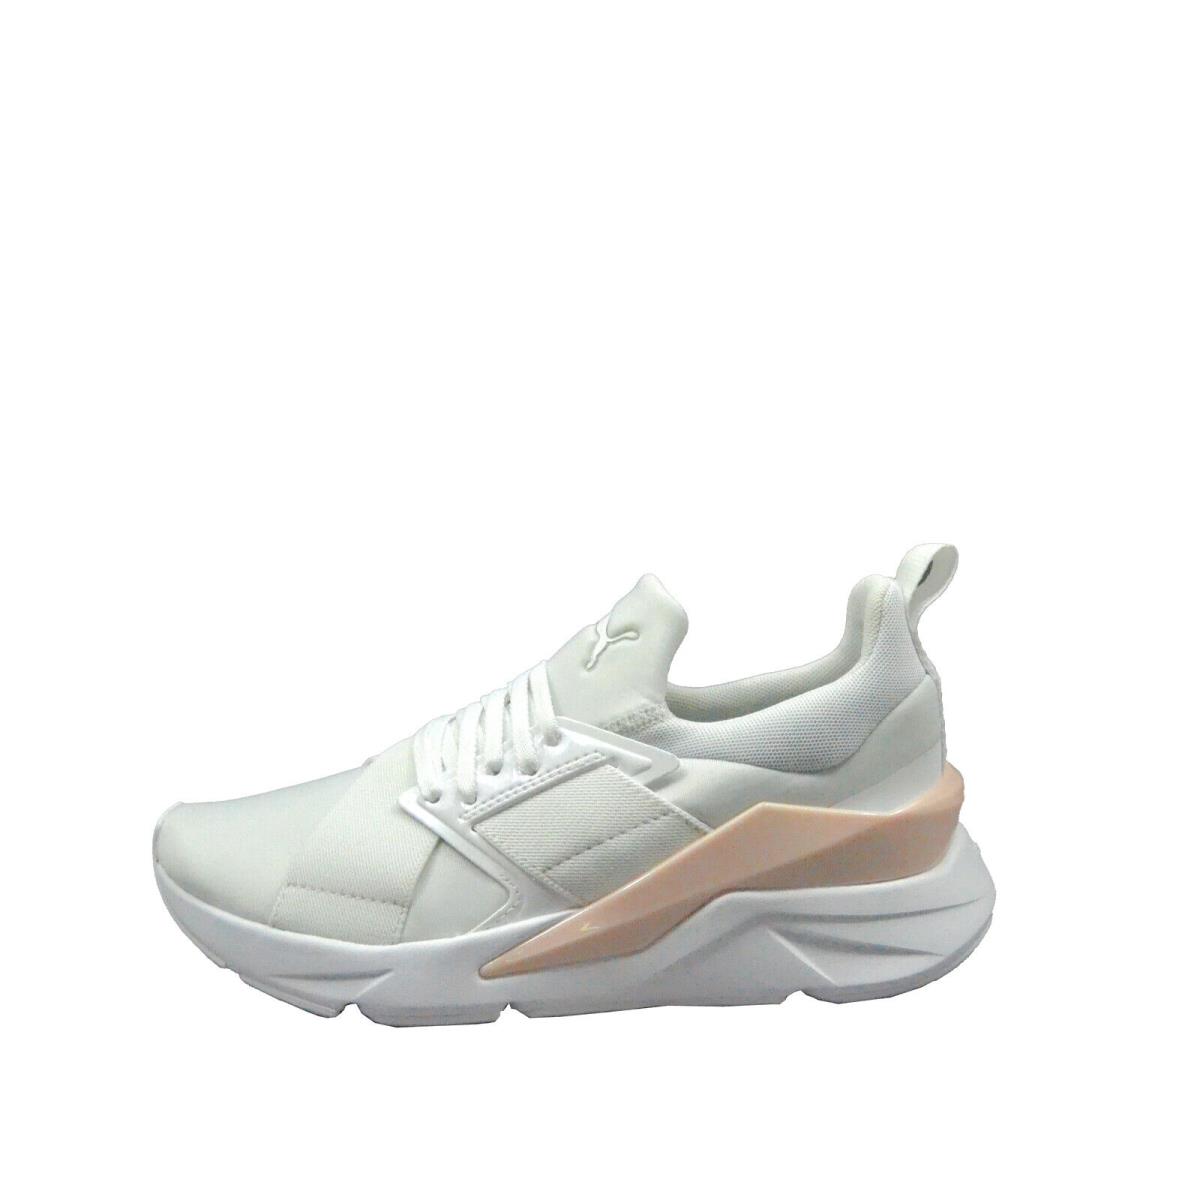 Puma shoes MUSE GLOW - White 0